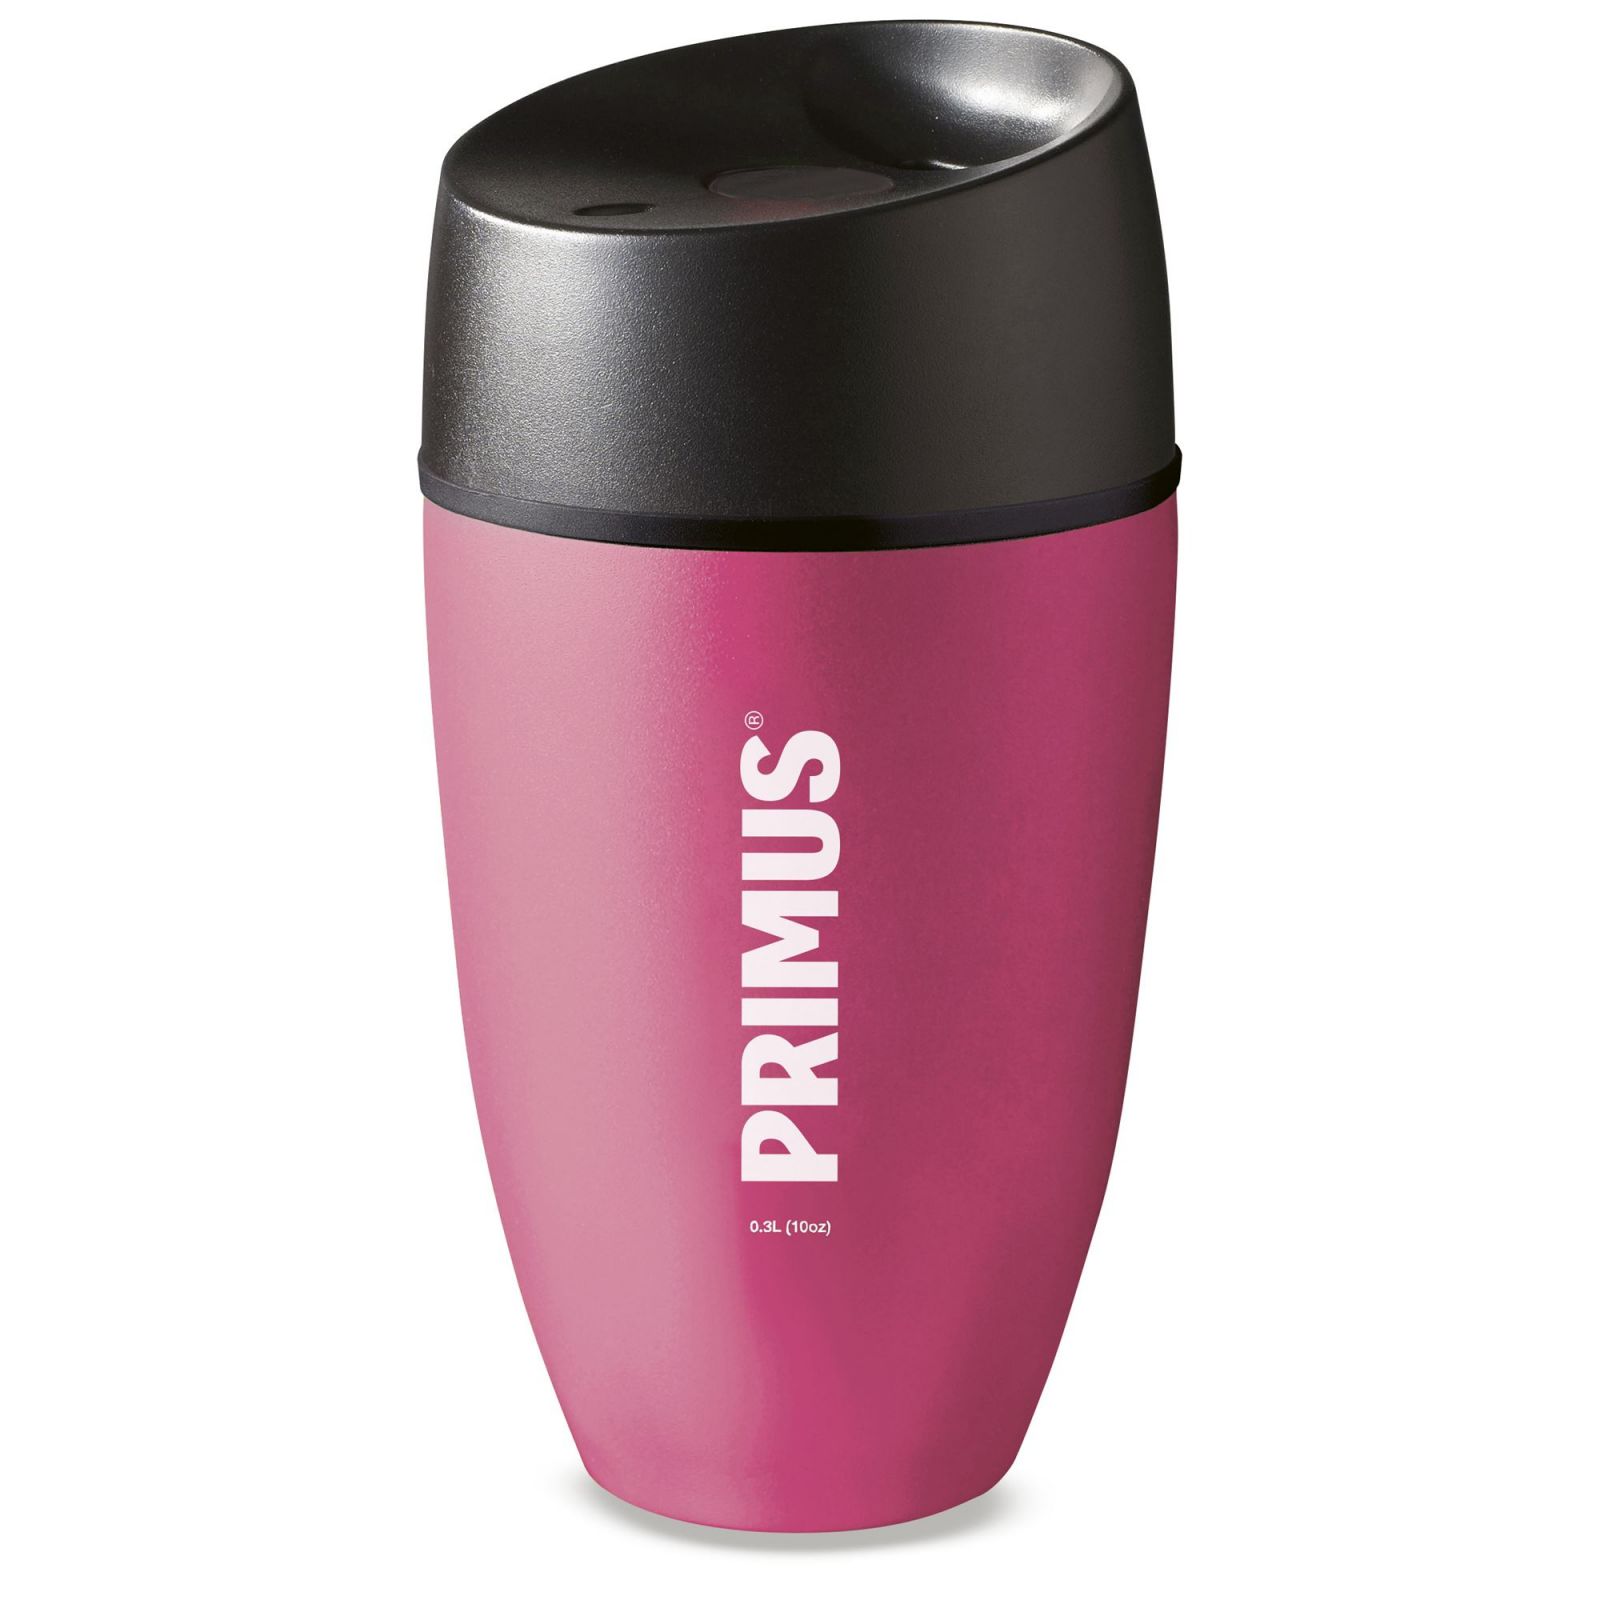 Primus termo hrnek Commuter Mug 0,3 742440 Pink